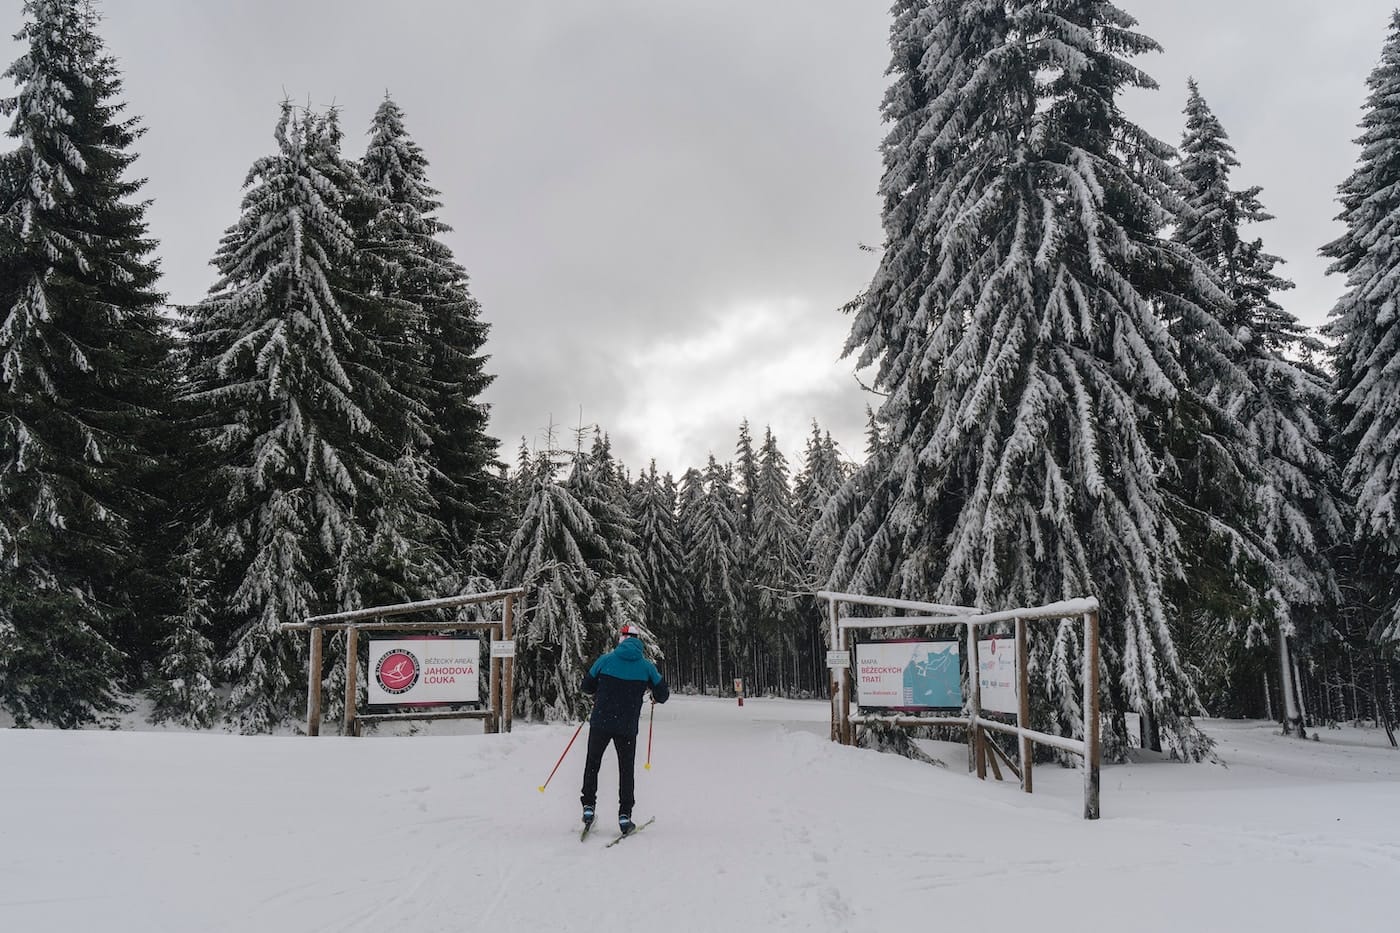 Wintersport in Duitsland: Langlaufen